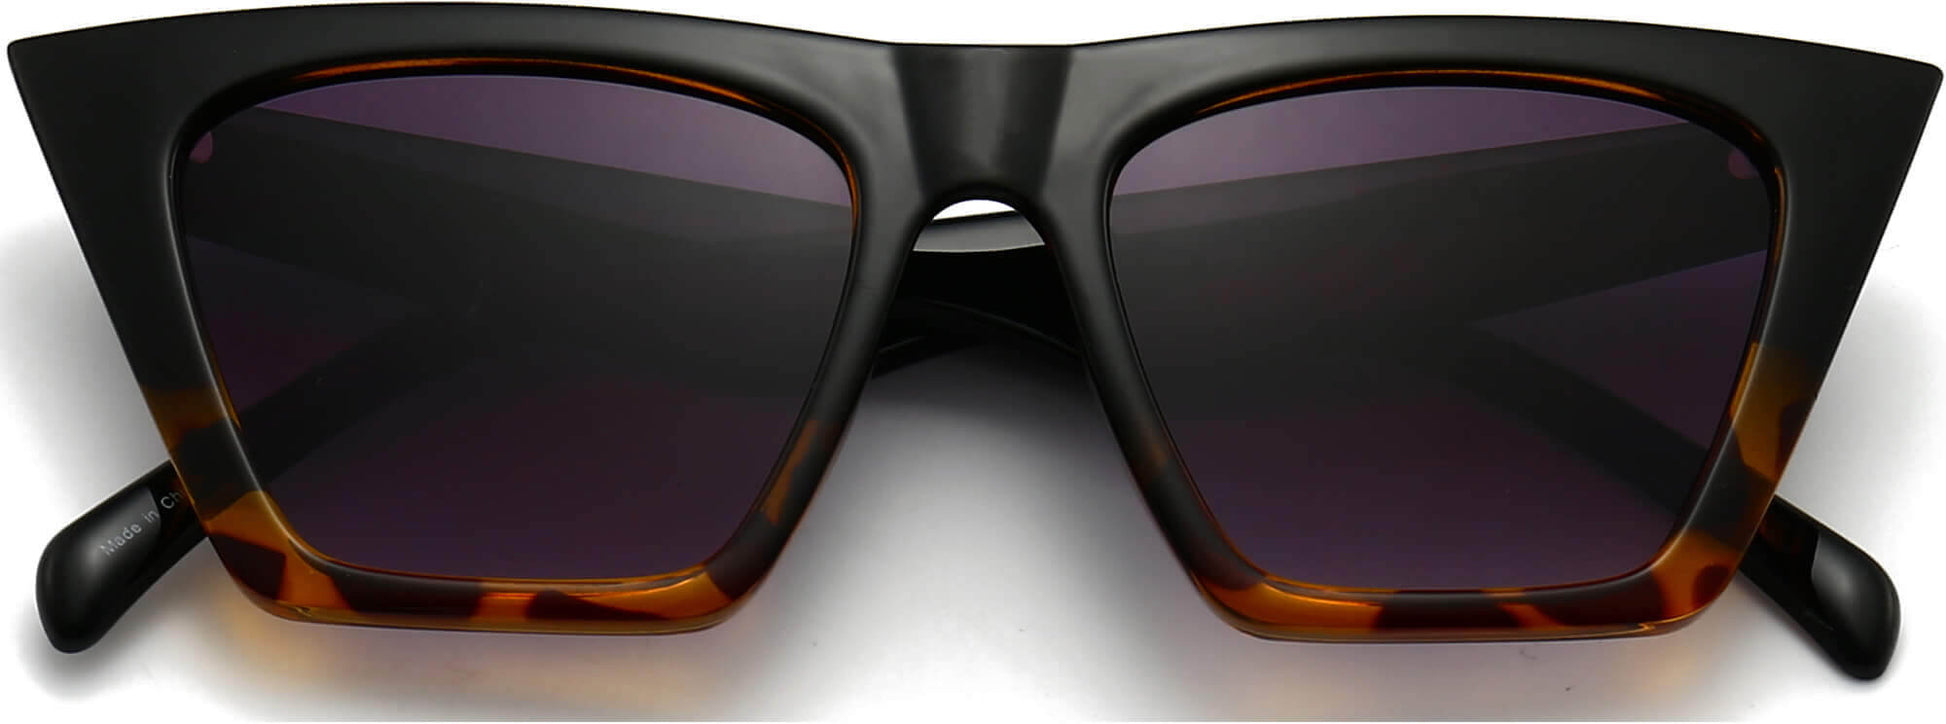 Leon Black Plastic Sunglasses from ANRRI, closed view